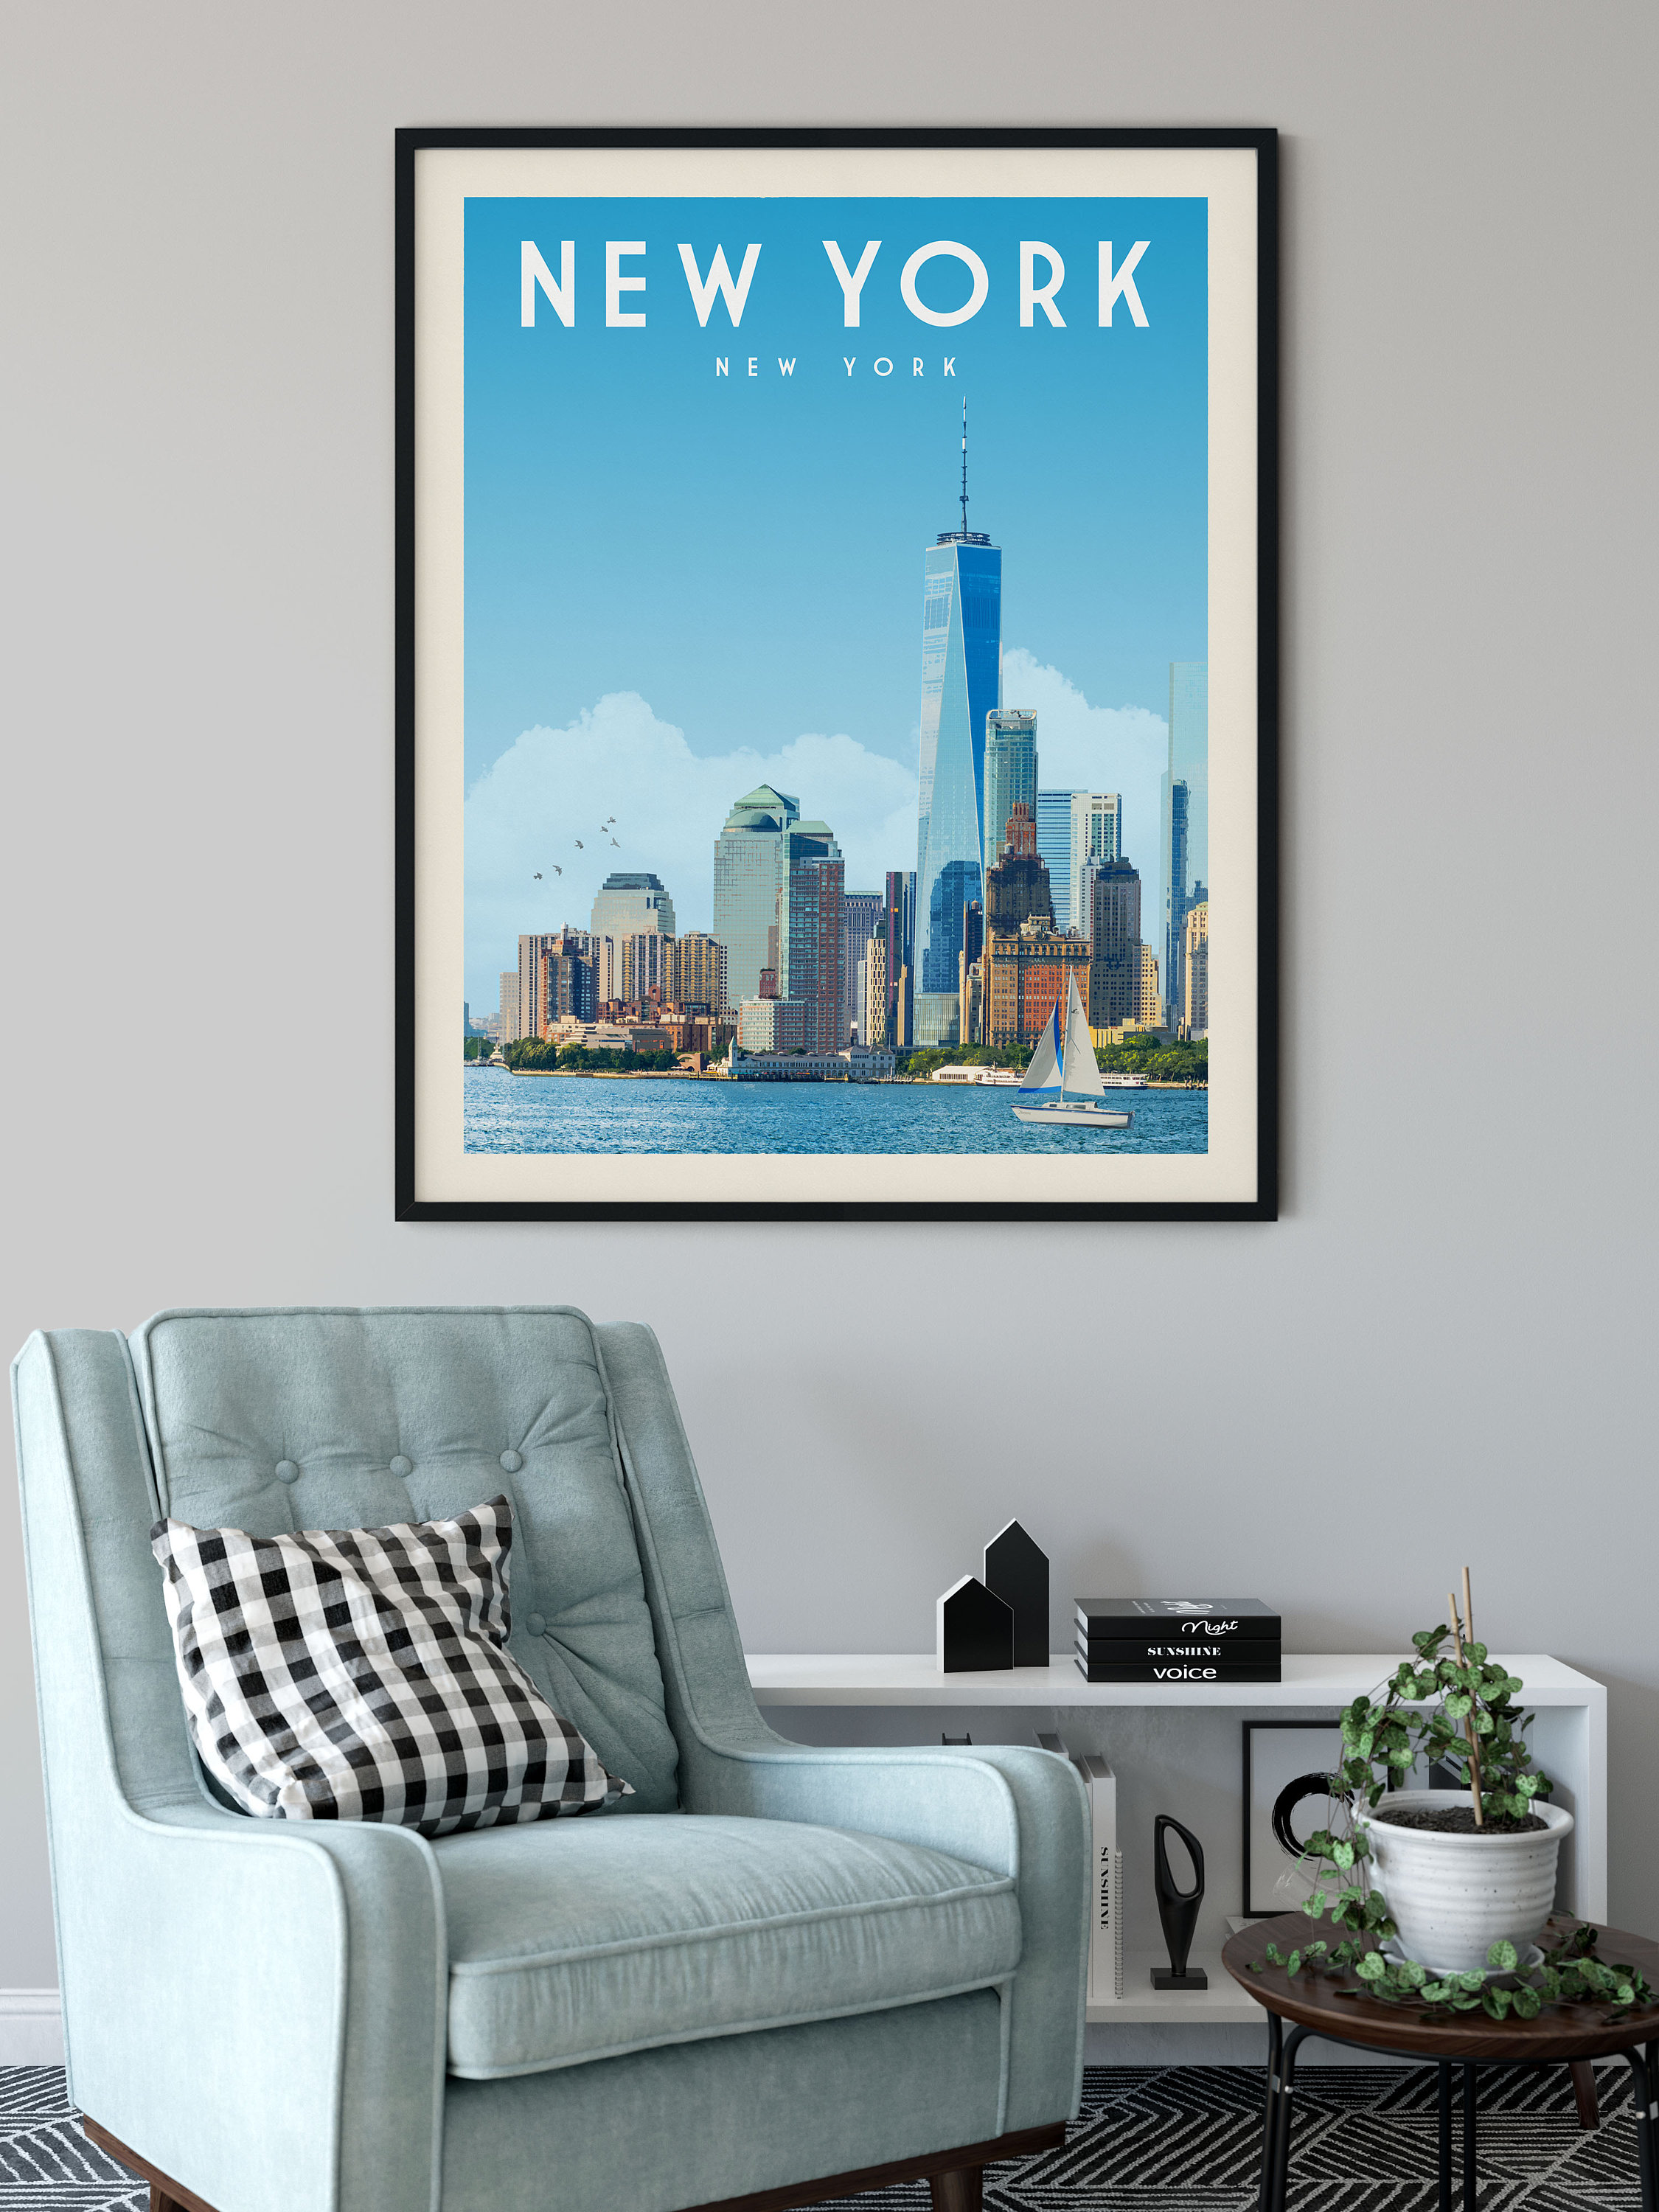 Discover New York City Skyline Poster Print, NYC Wall Art Print Home Decor, Vintage New York State Travel Poster, New York City Wall Art Travel Gifts